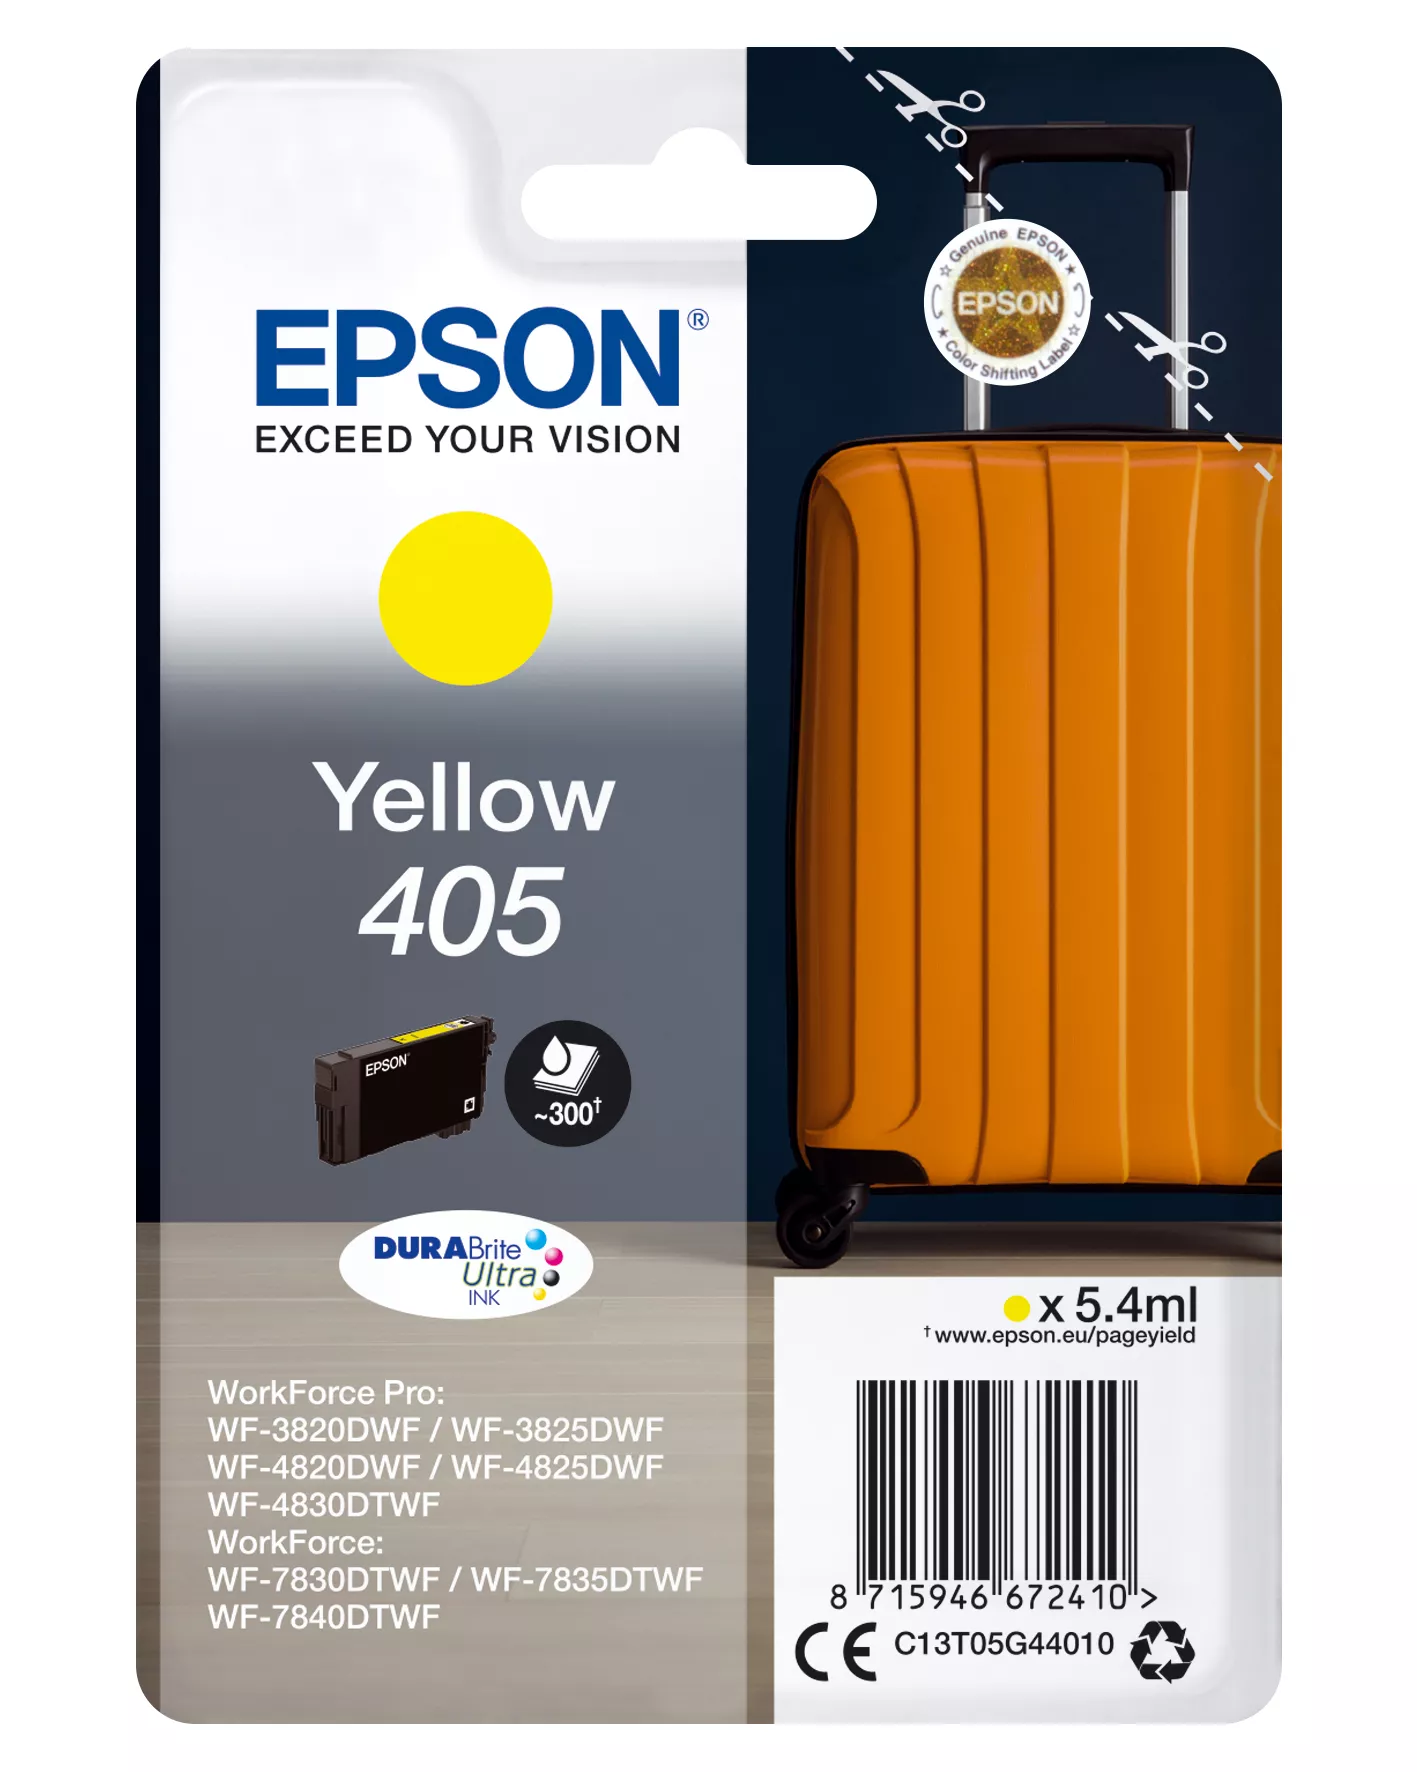 Achat EPSON Singlepack Yellow 405 DURABrite Ultra Ink au meilleur prix